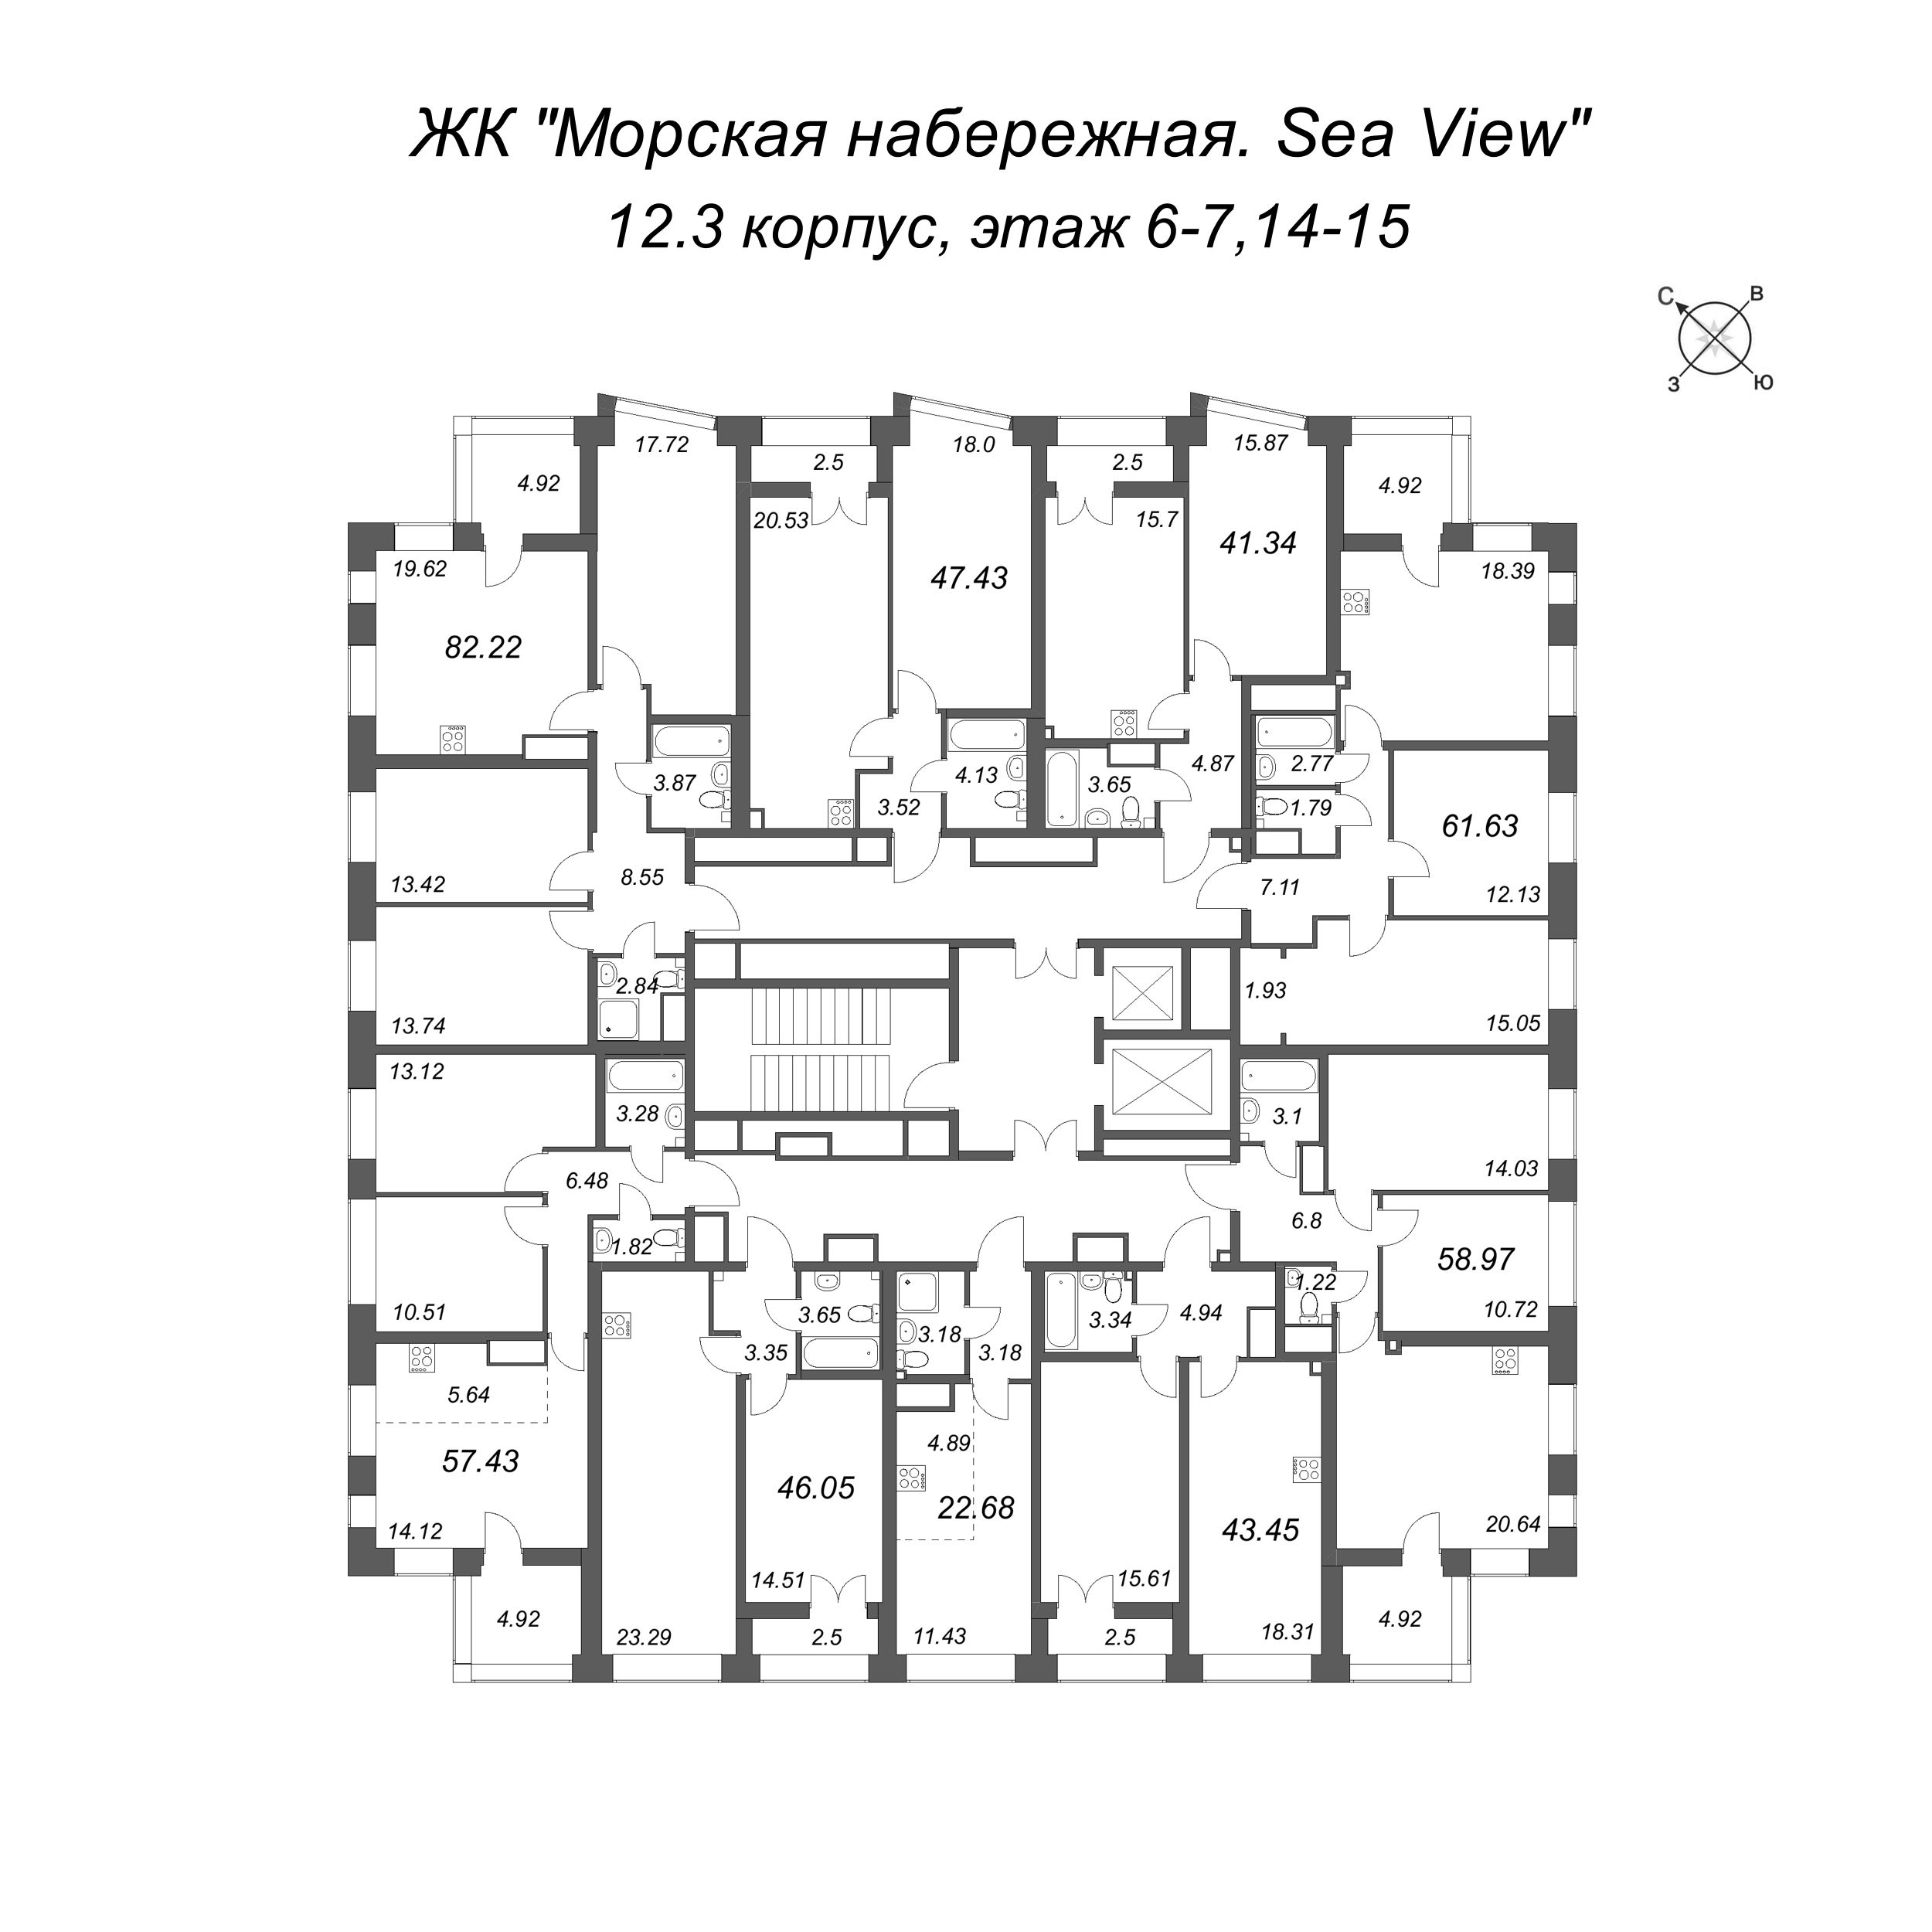 4-комнатная (Евро) квартира, 82.22 м² - планировка этажа